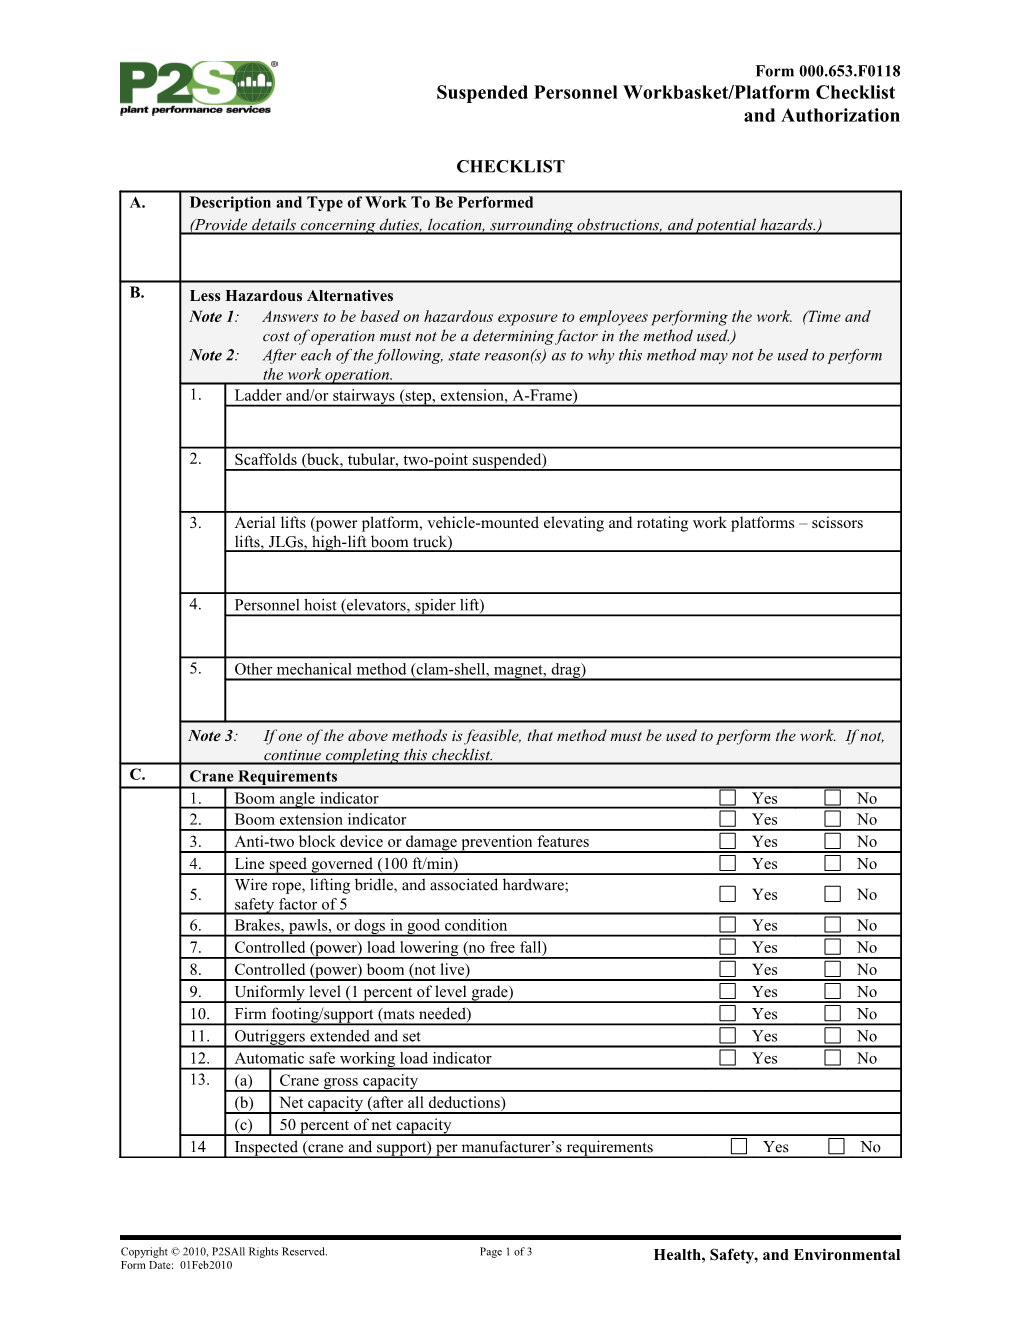 Suspended Personnel Workbasket/Platform Checklist and Authorization